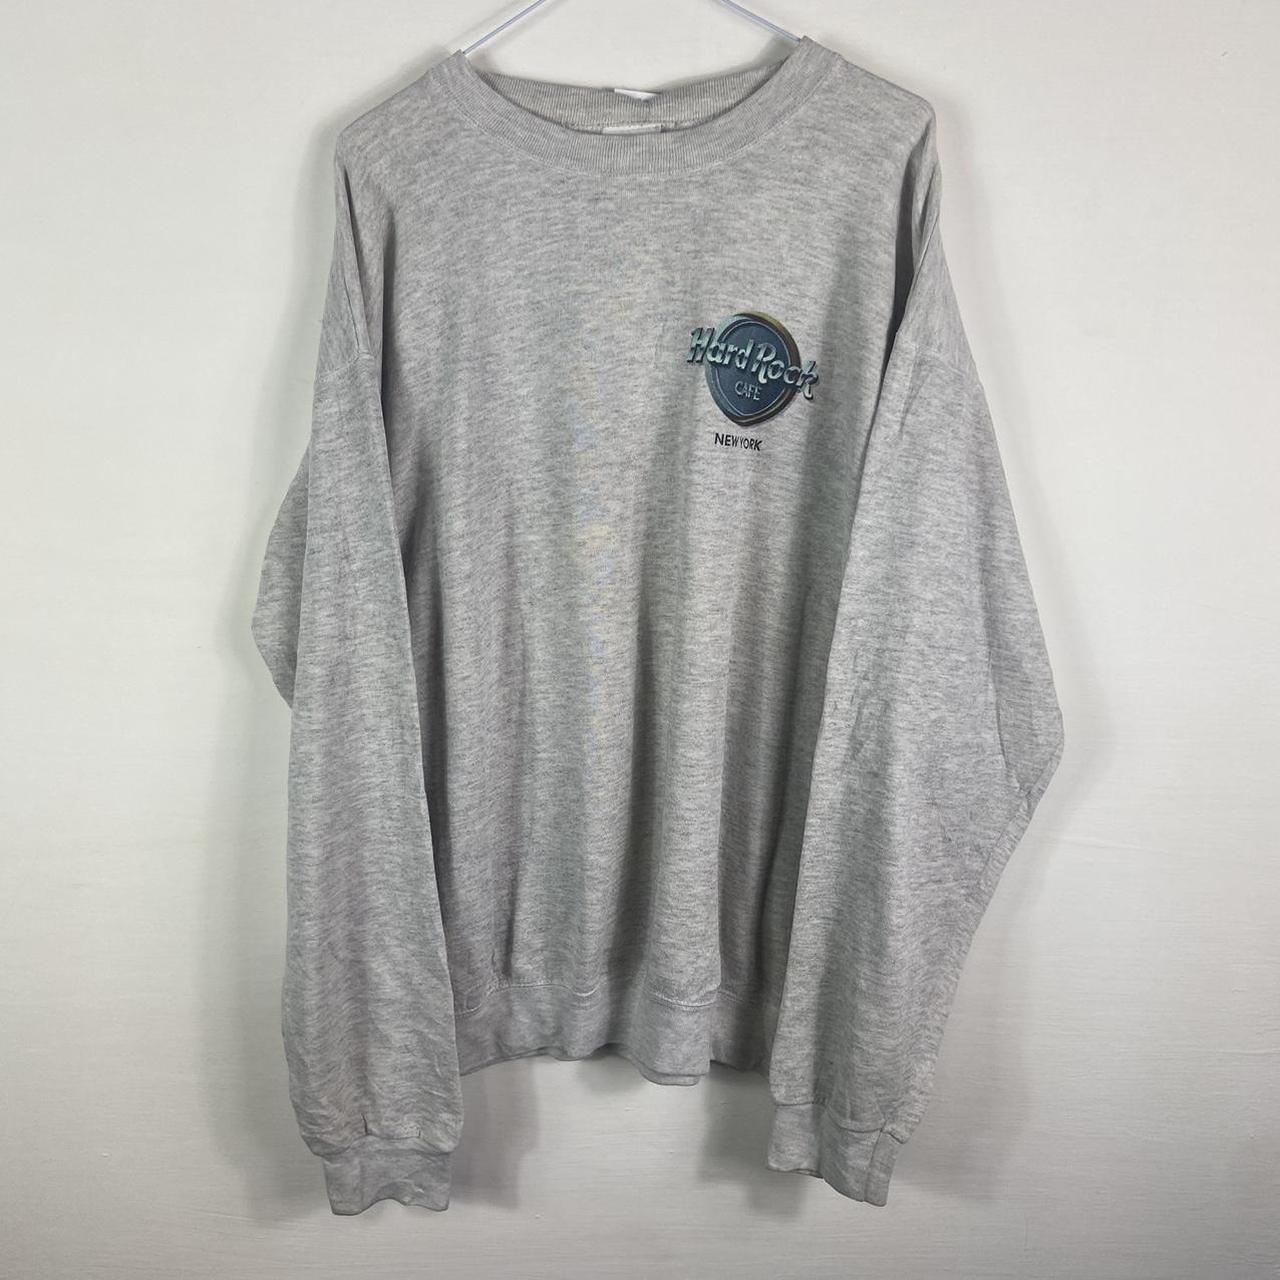 Hard Rock Cafe print sweatshirt grey Size -... - Depop